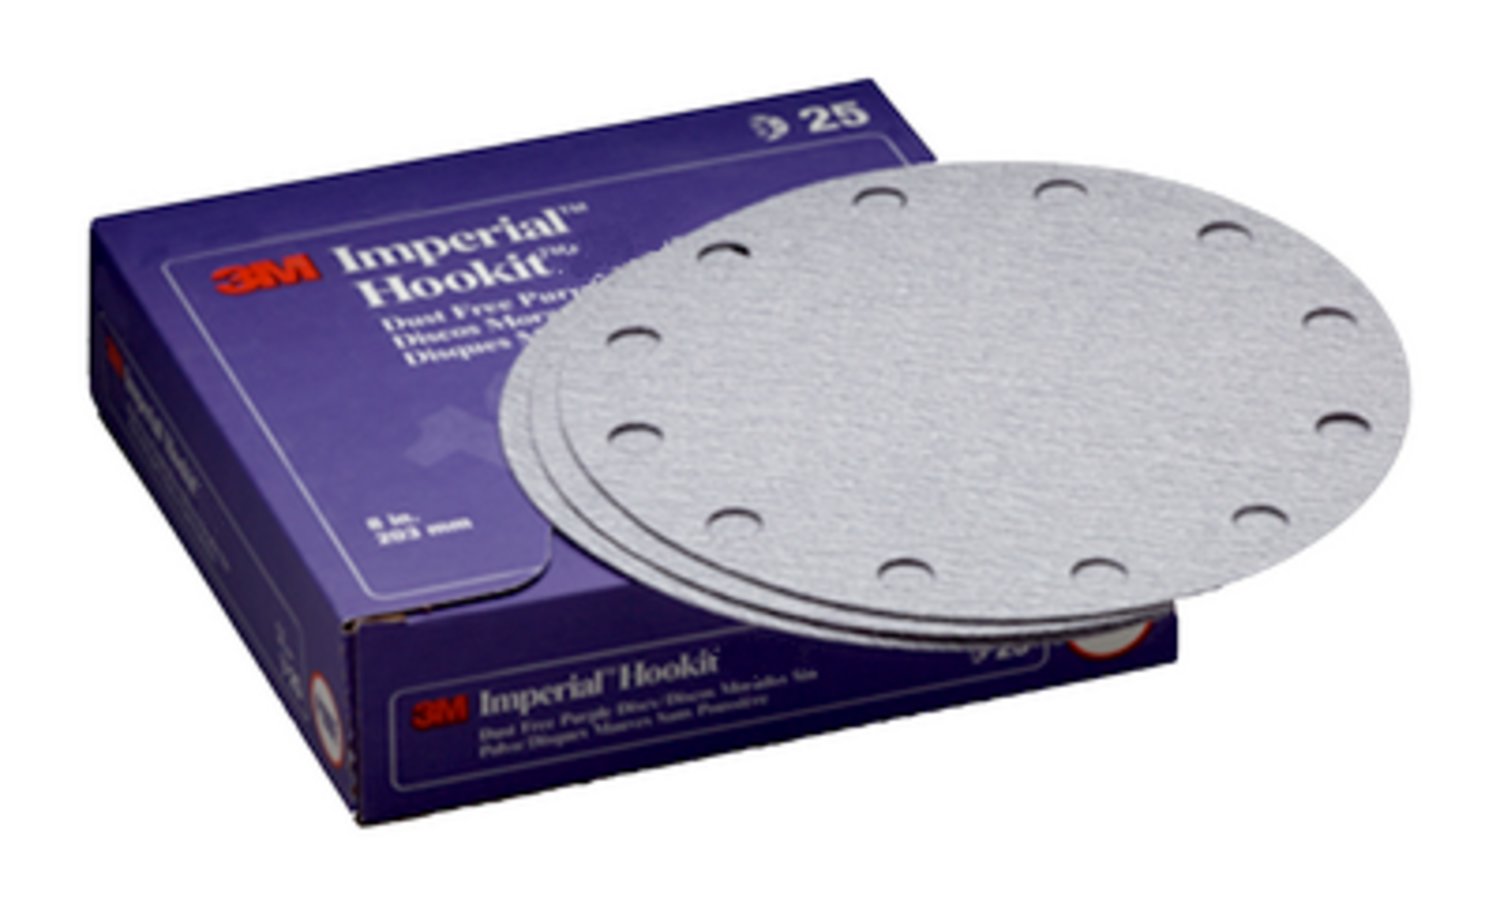 7010307752 - 3M Imperial Hookit Dust-Free Disc 740I, 01853, 8 in, 36E, 25 discs
per carton, 4 cartons per case